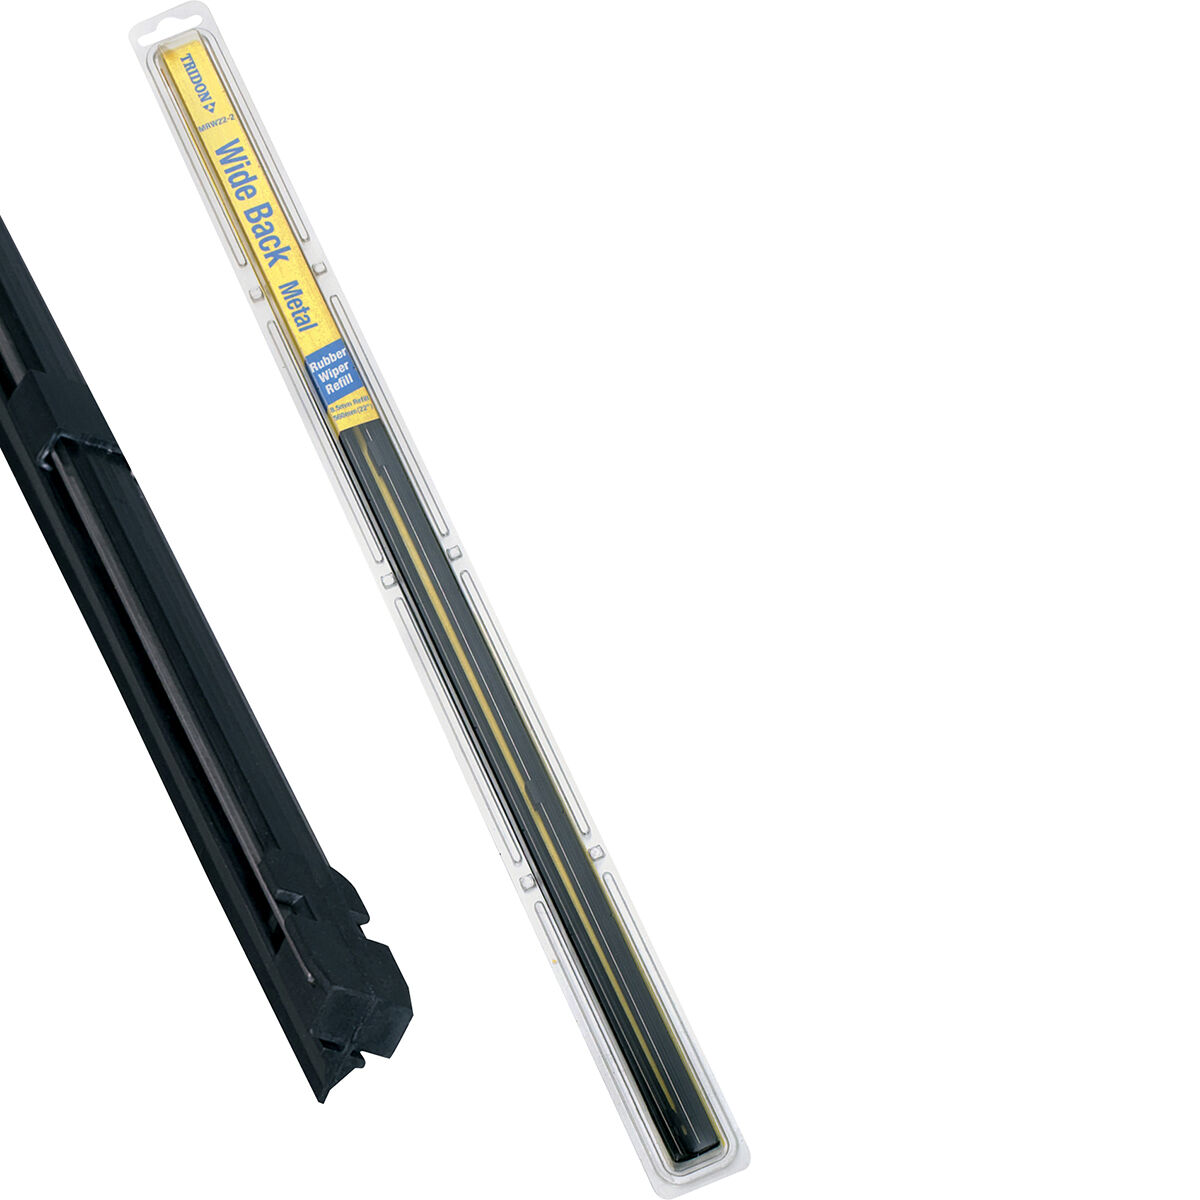 Tridon Wiper Refills - Metal Rail Wide Back, Suits 8.5mm, MRW22-2, , scaau_hi-res